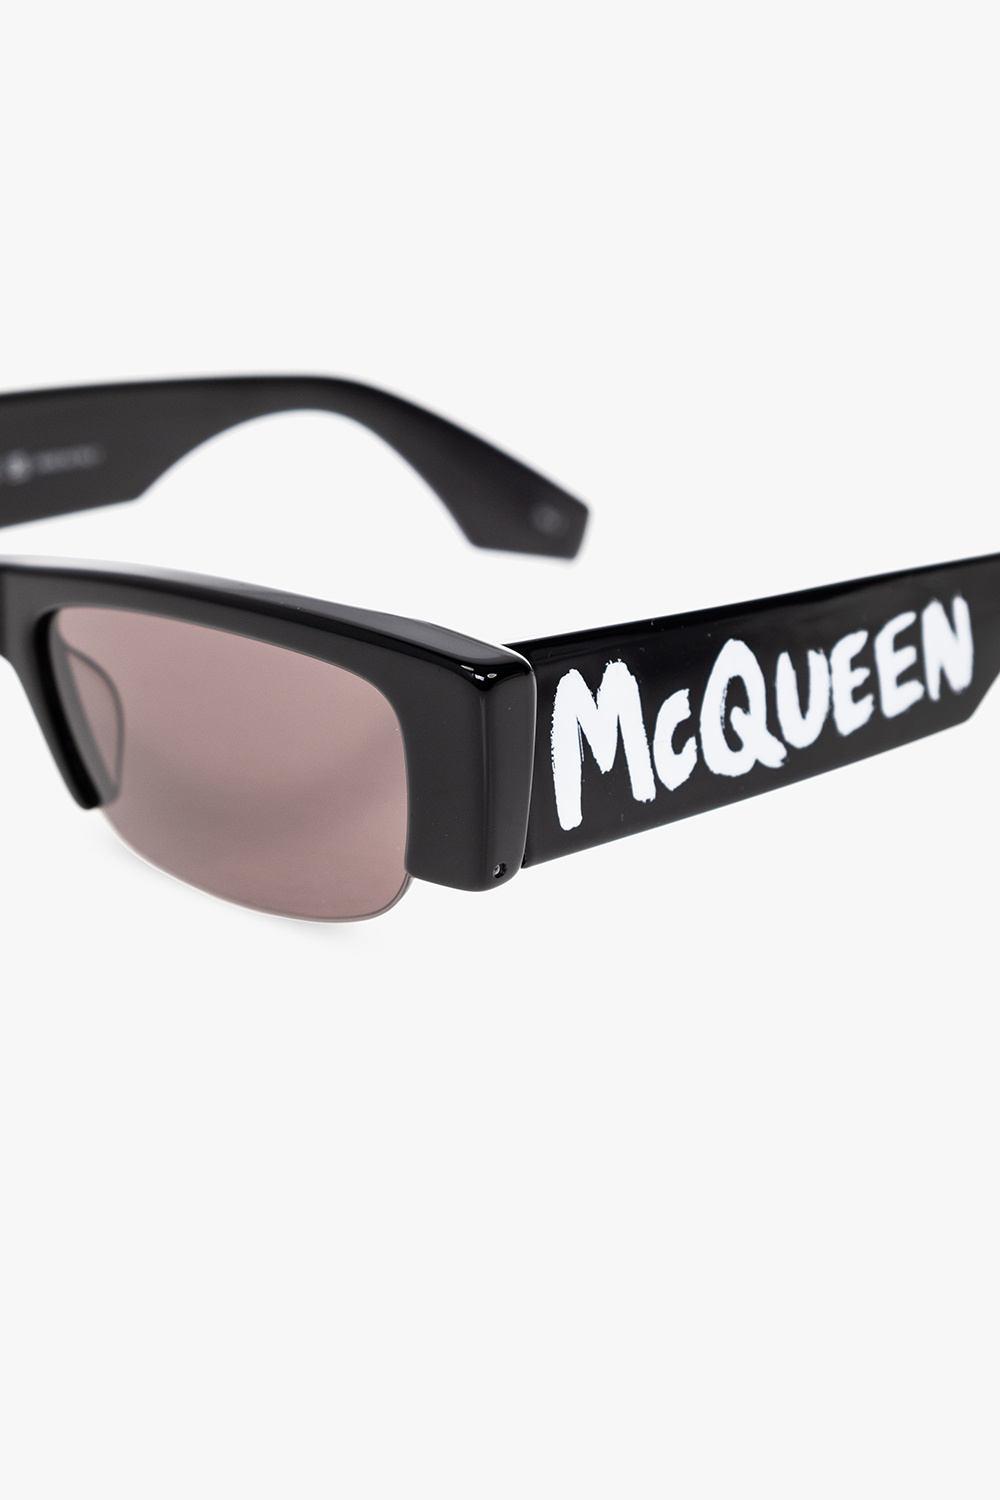 Alexander McQueen x Akoni 1914 sunglasses